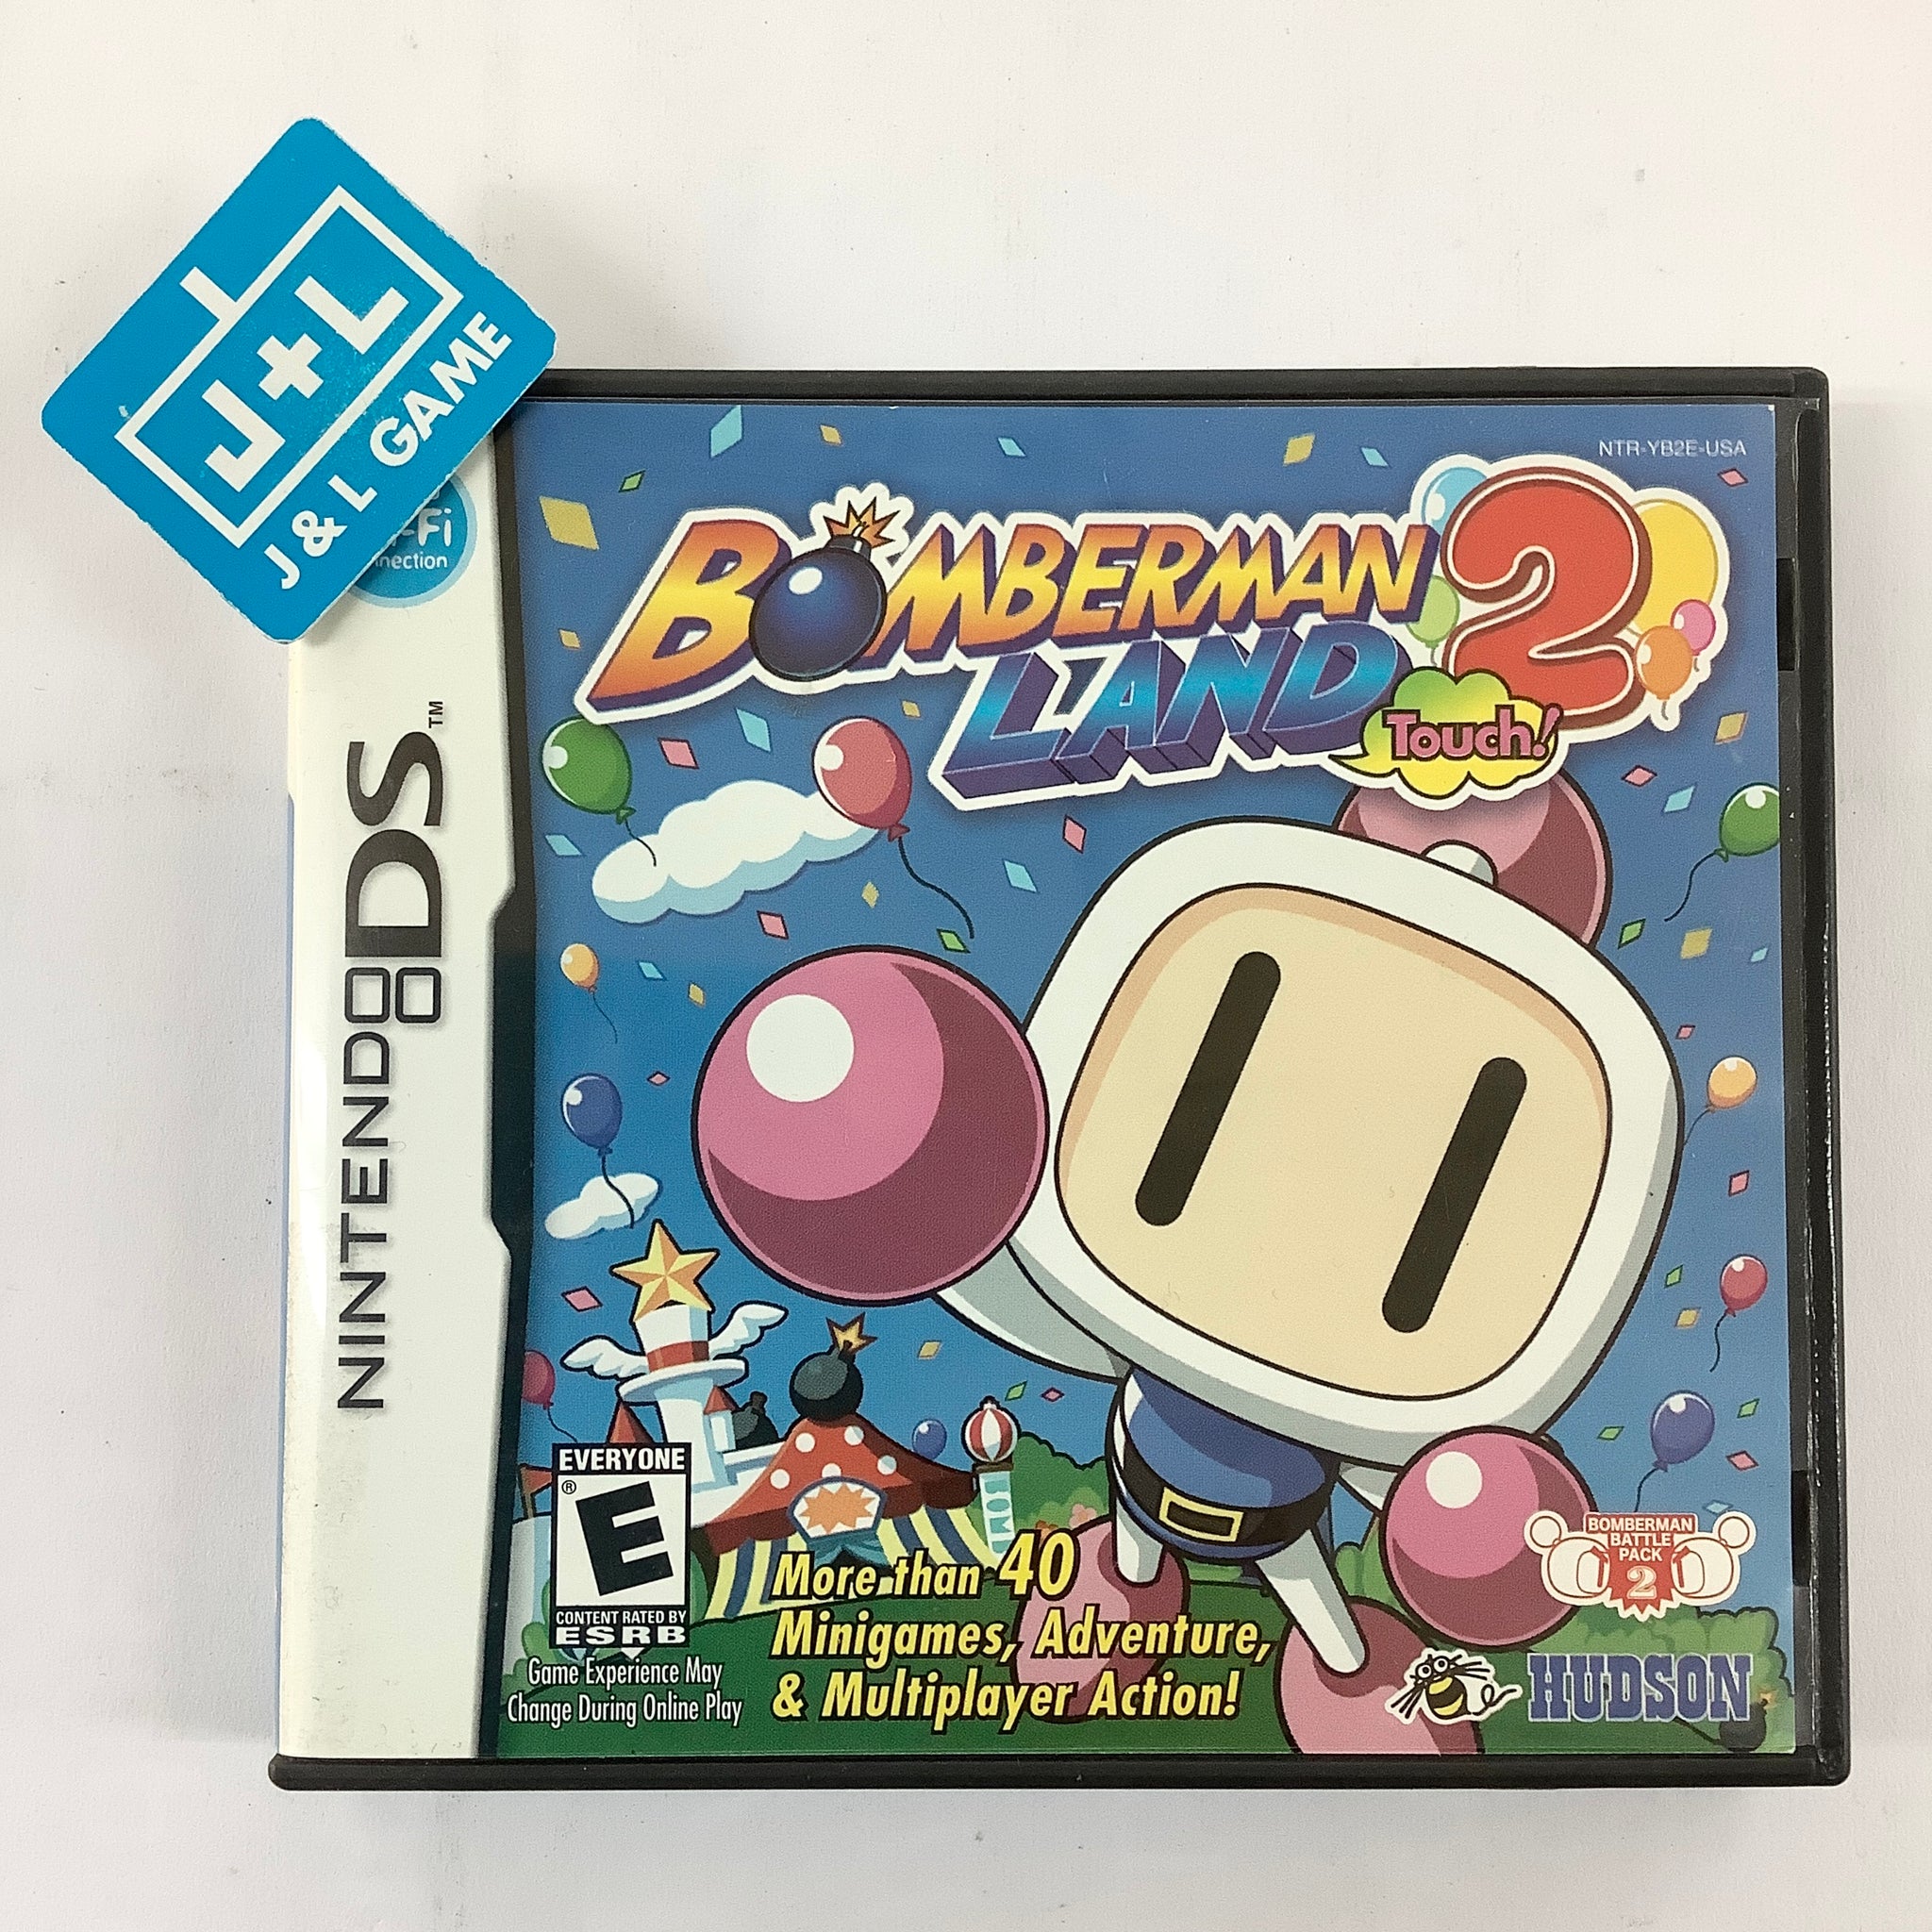 Bomberman Hardball - IGN